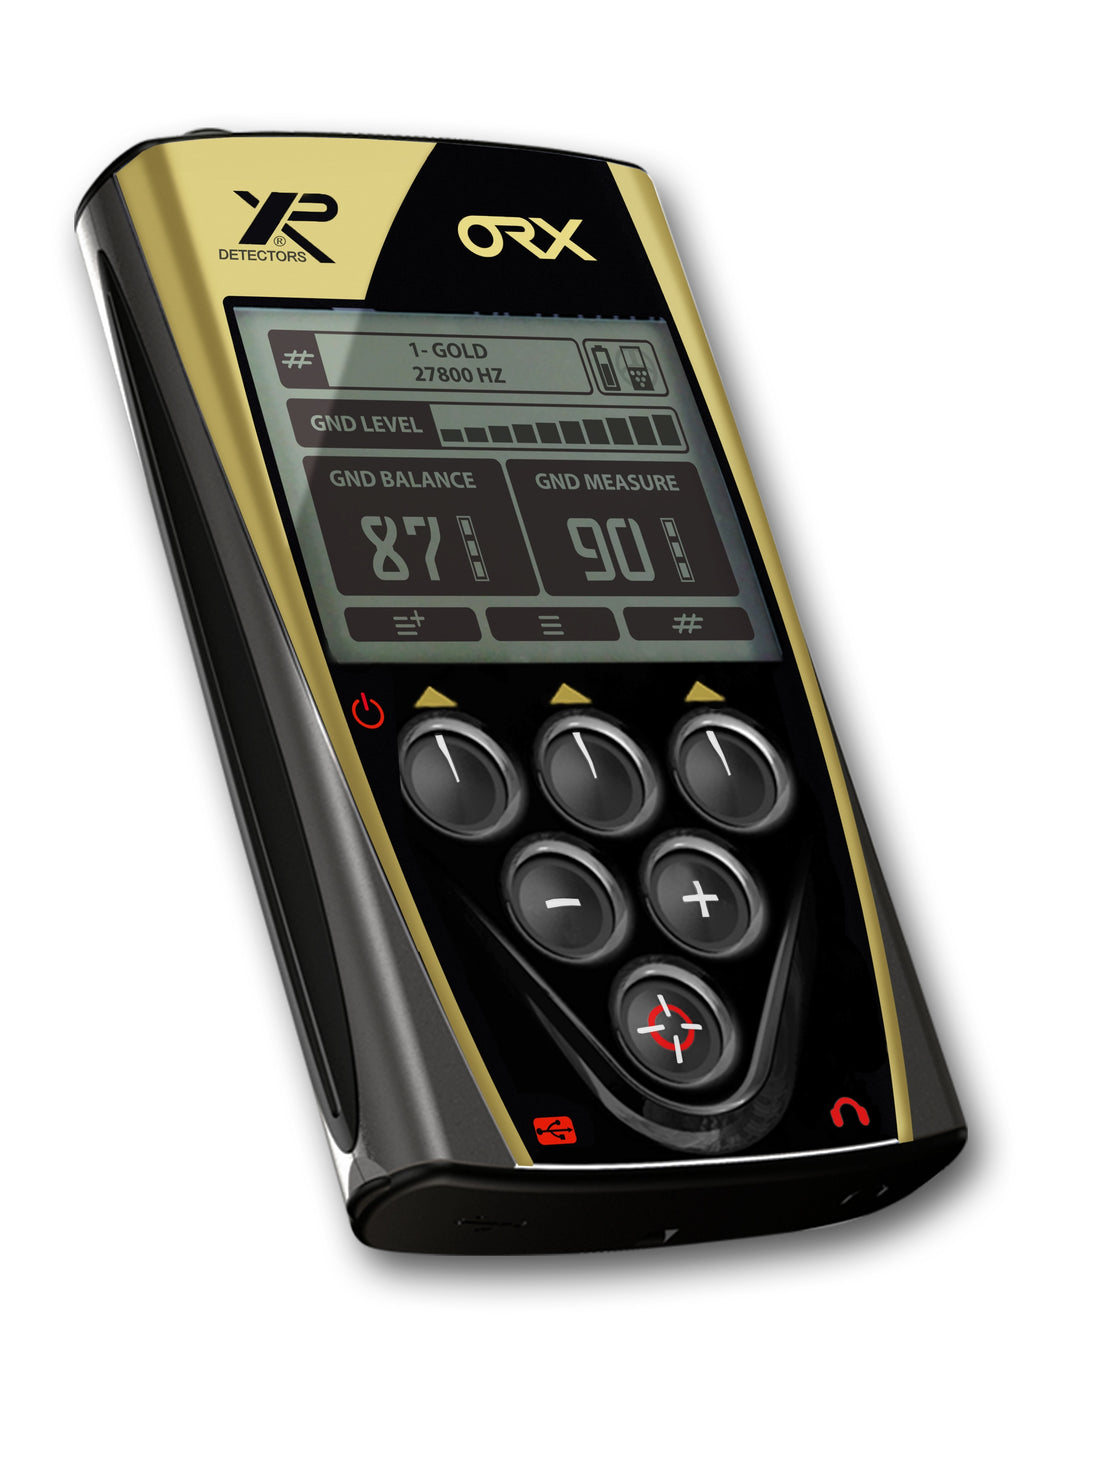 XP ORX Back-lit LCDDisplay Remote Control Side